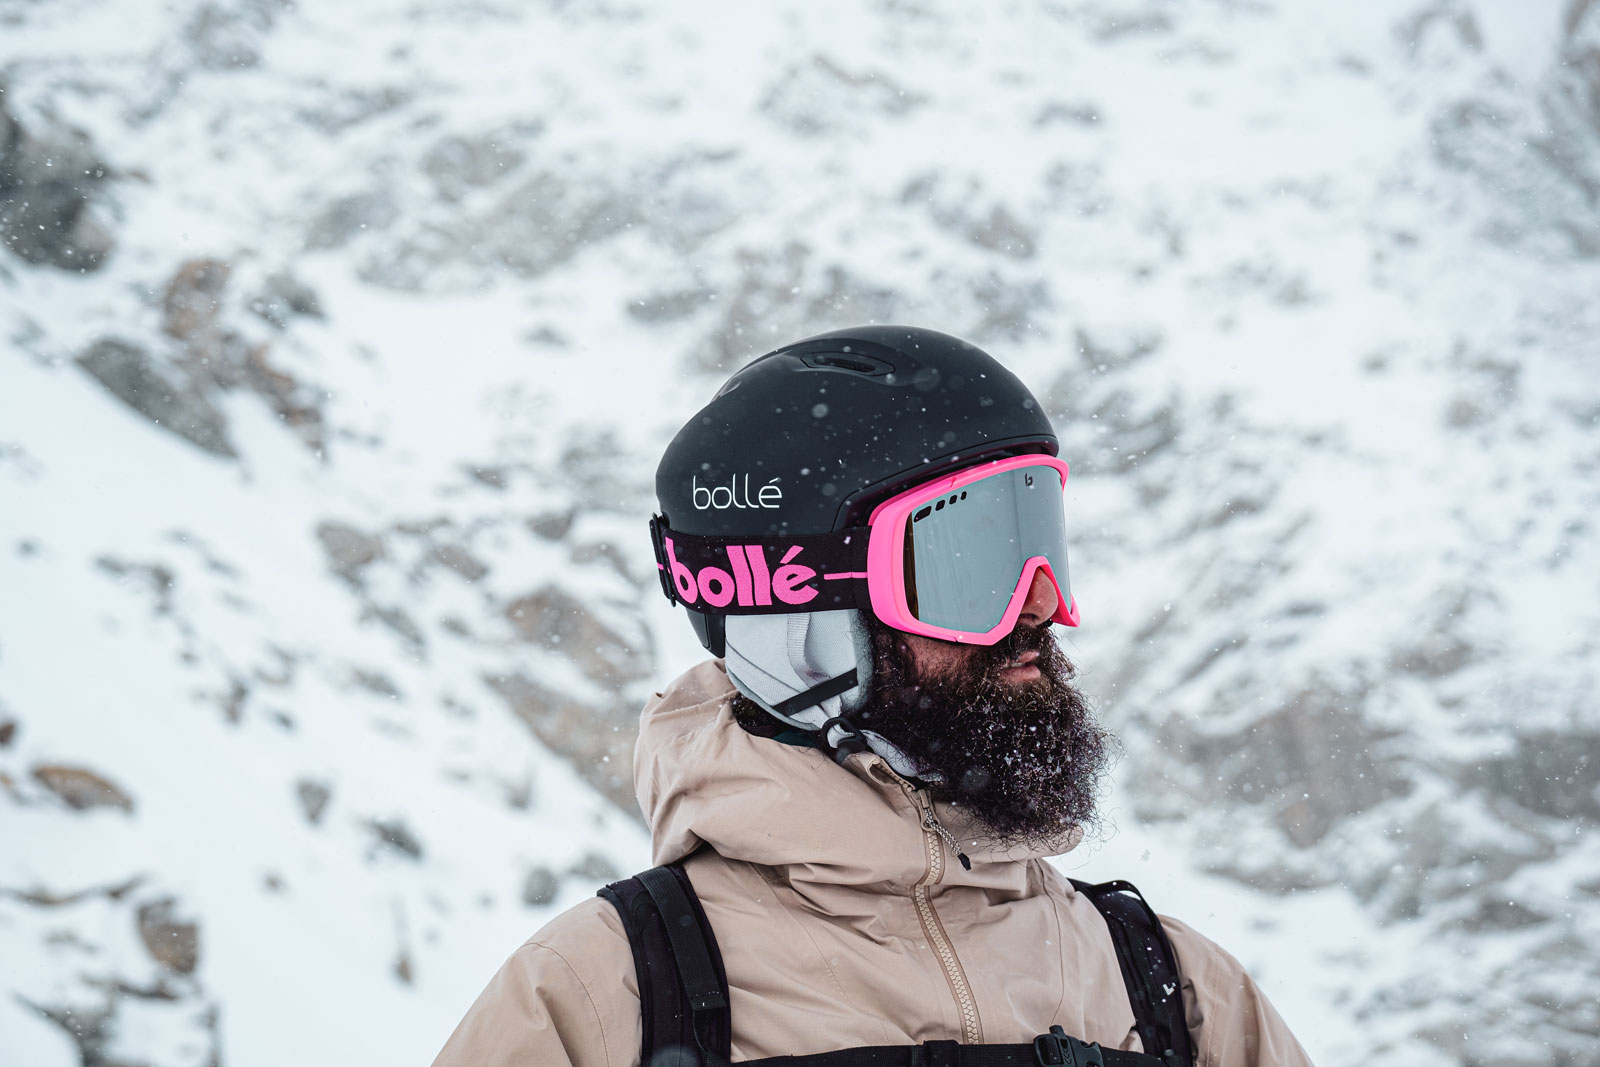 Downhill ski helmet